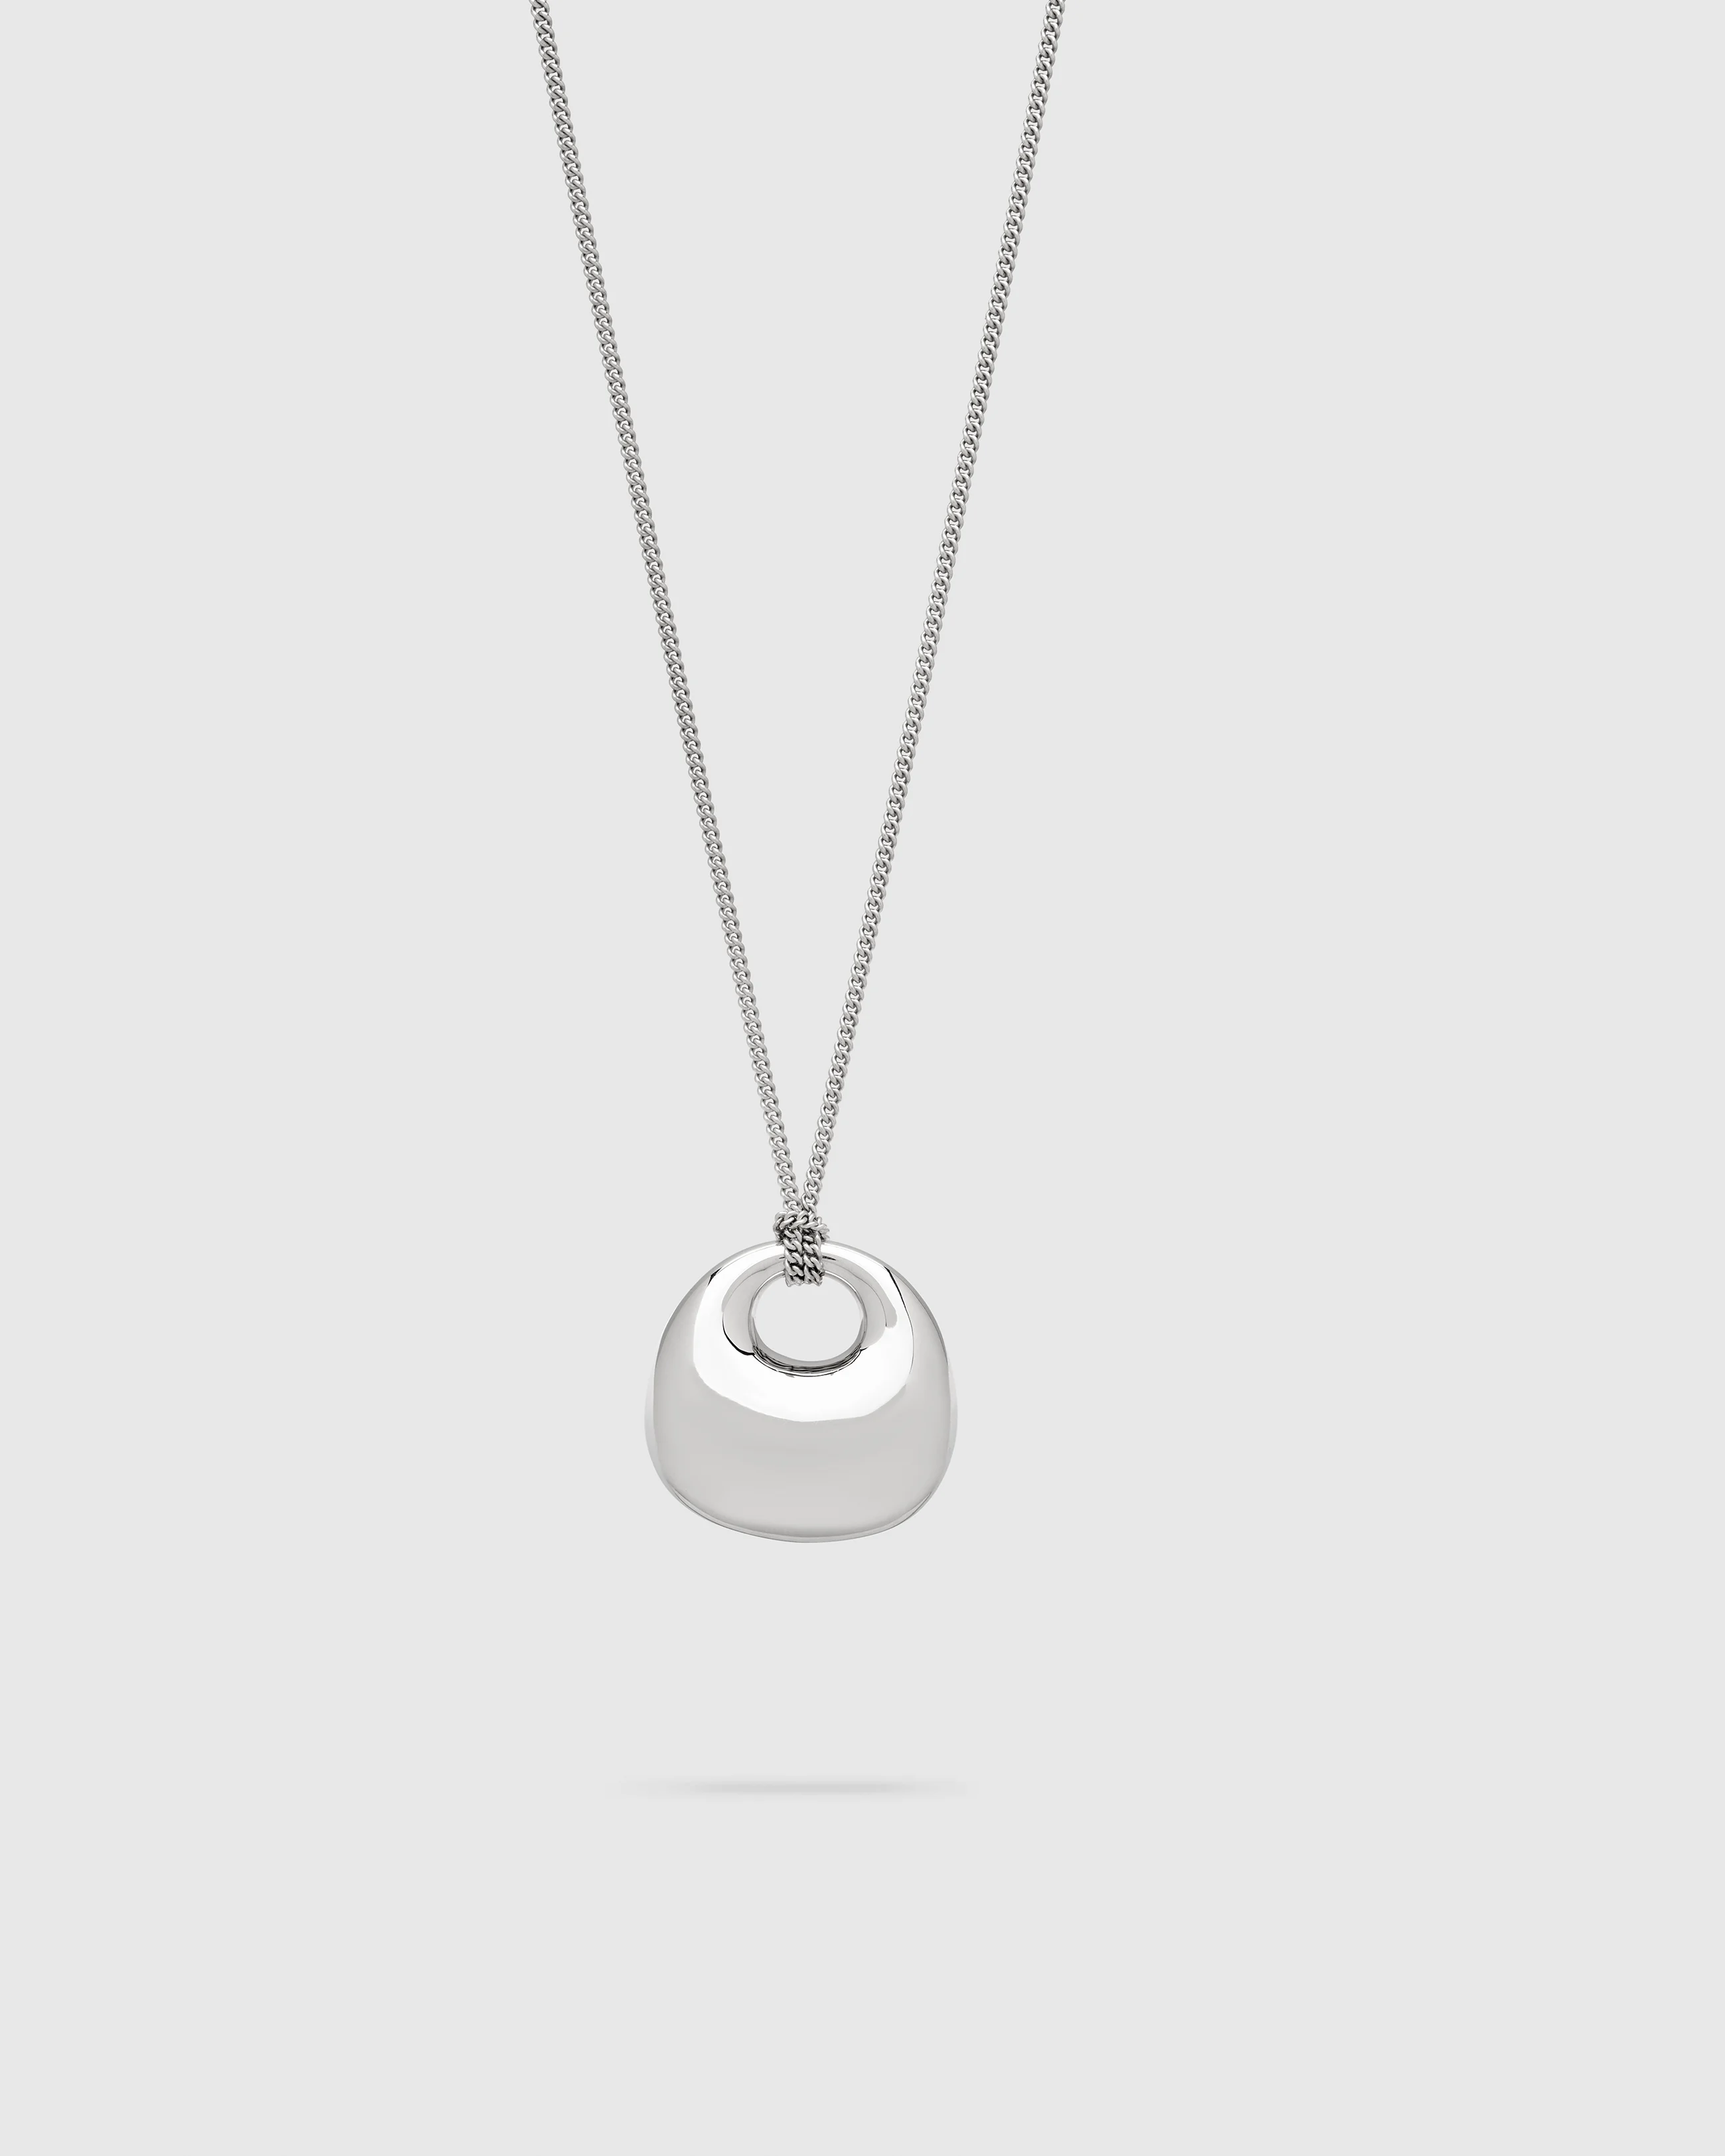 Bao collection - landingpage - Bao pendant